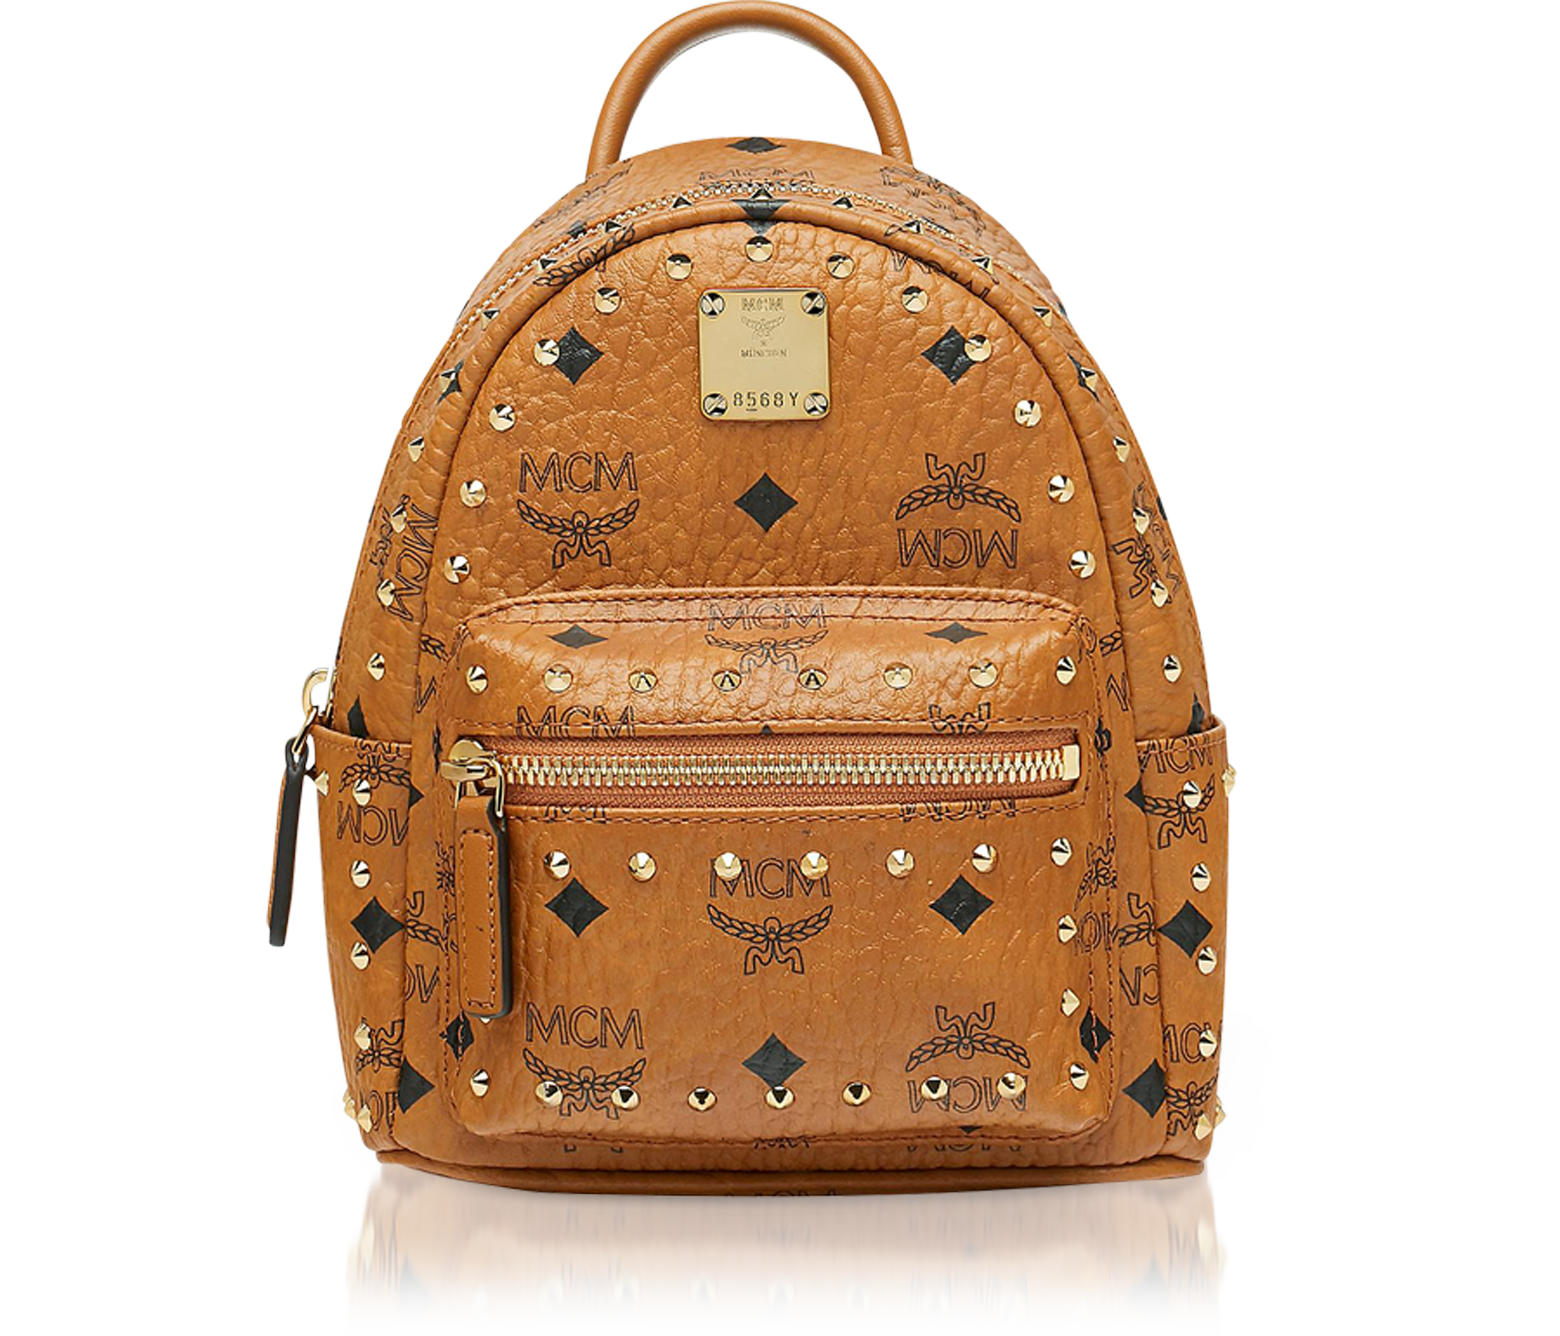 💕Pink and Black MCM Mini Backpack